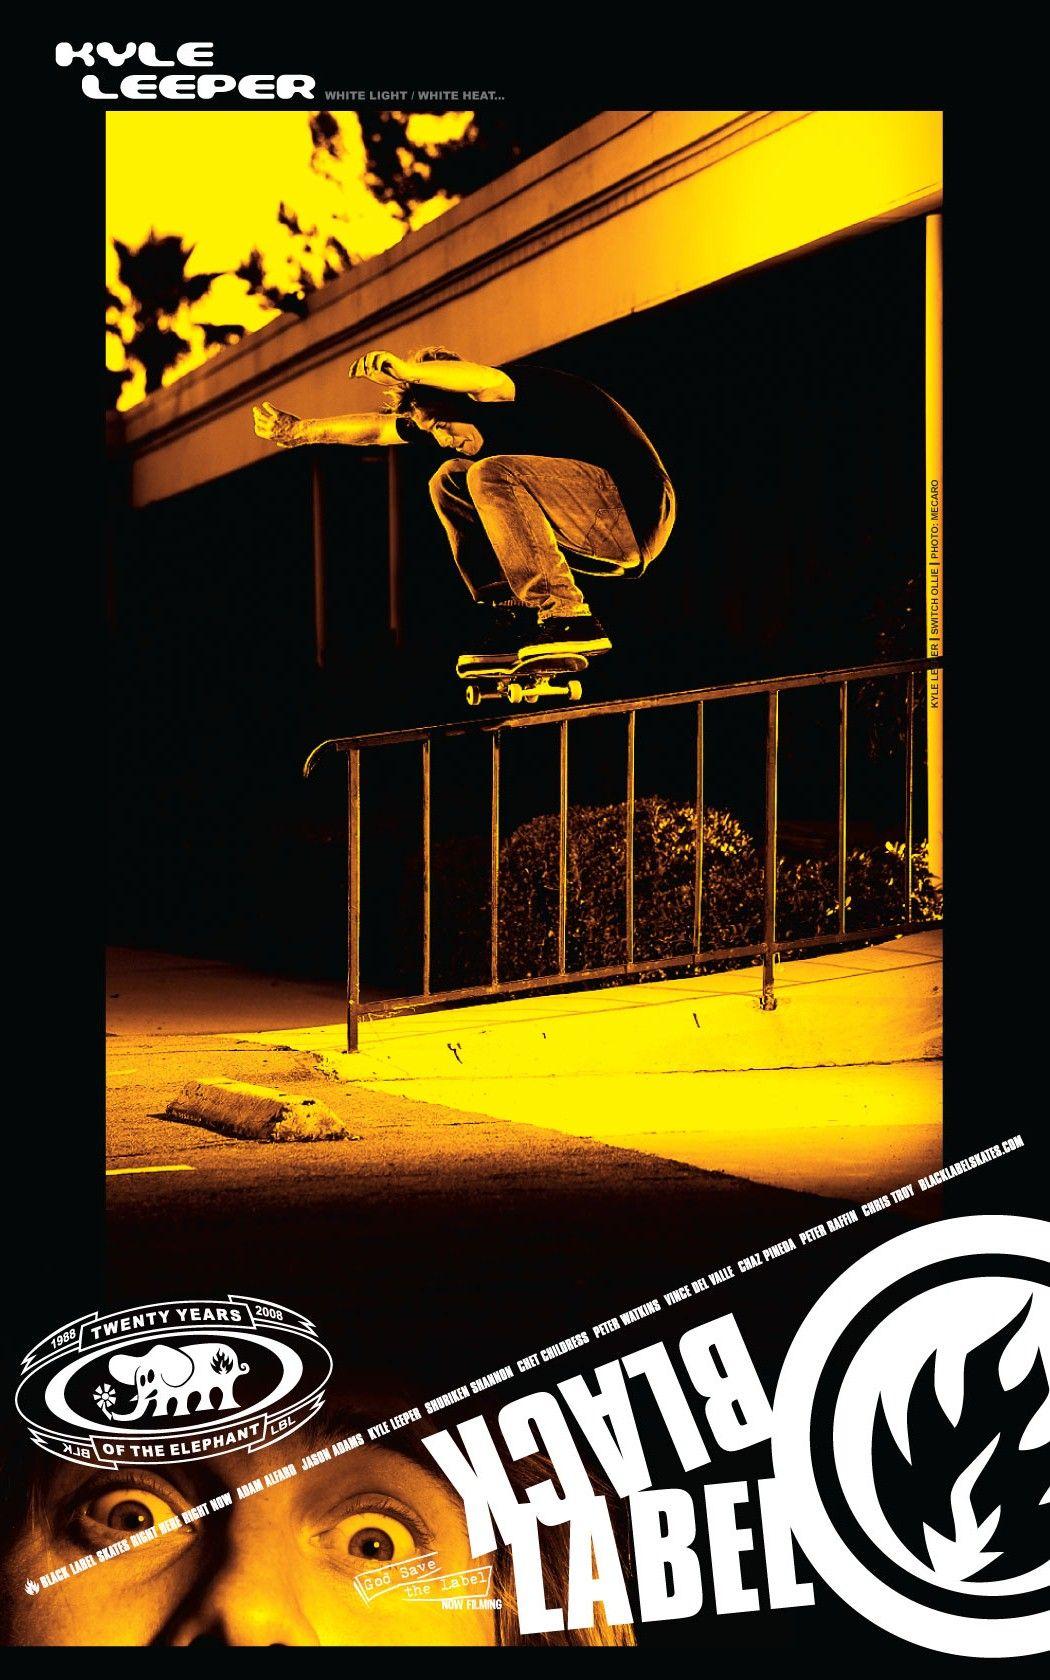 Black Label skateboards wallpaper. Skateboarding wallpaper